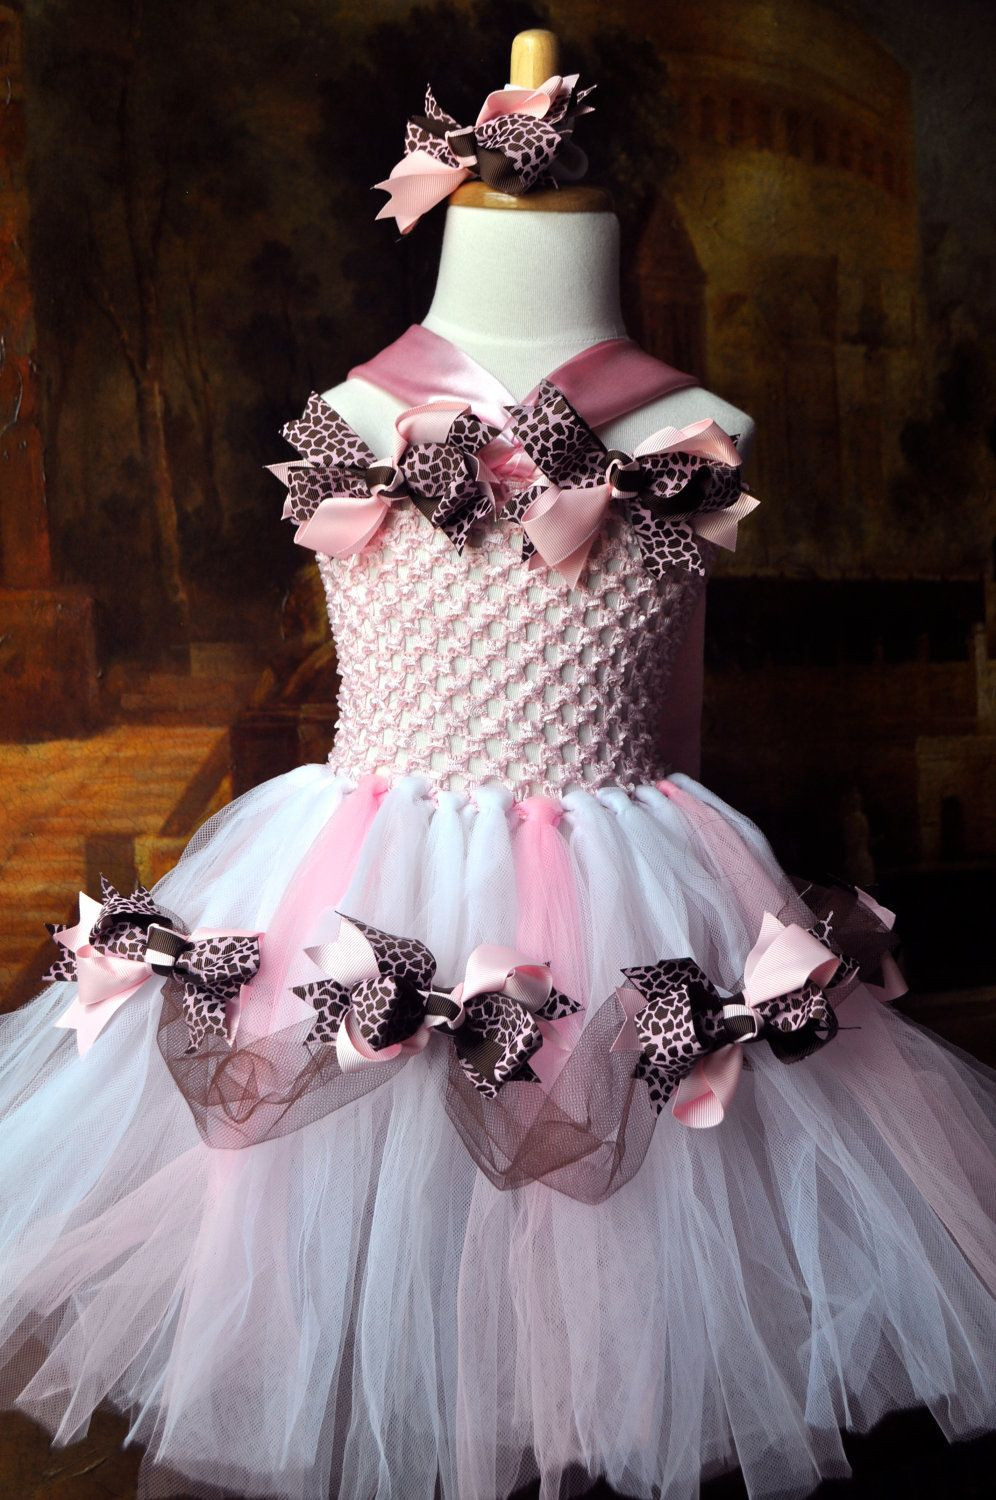 DIY Tutu Dress For Toddler
 leopard light pink handmade tutu dress matching ribbon